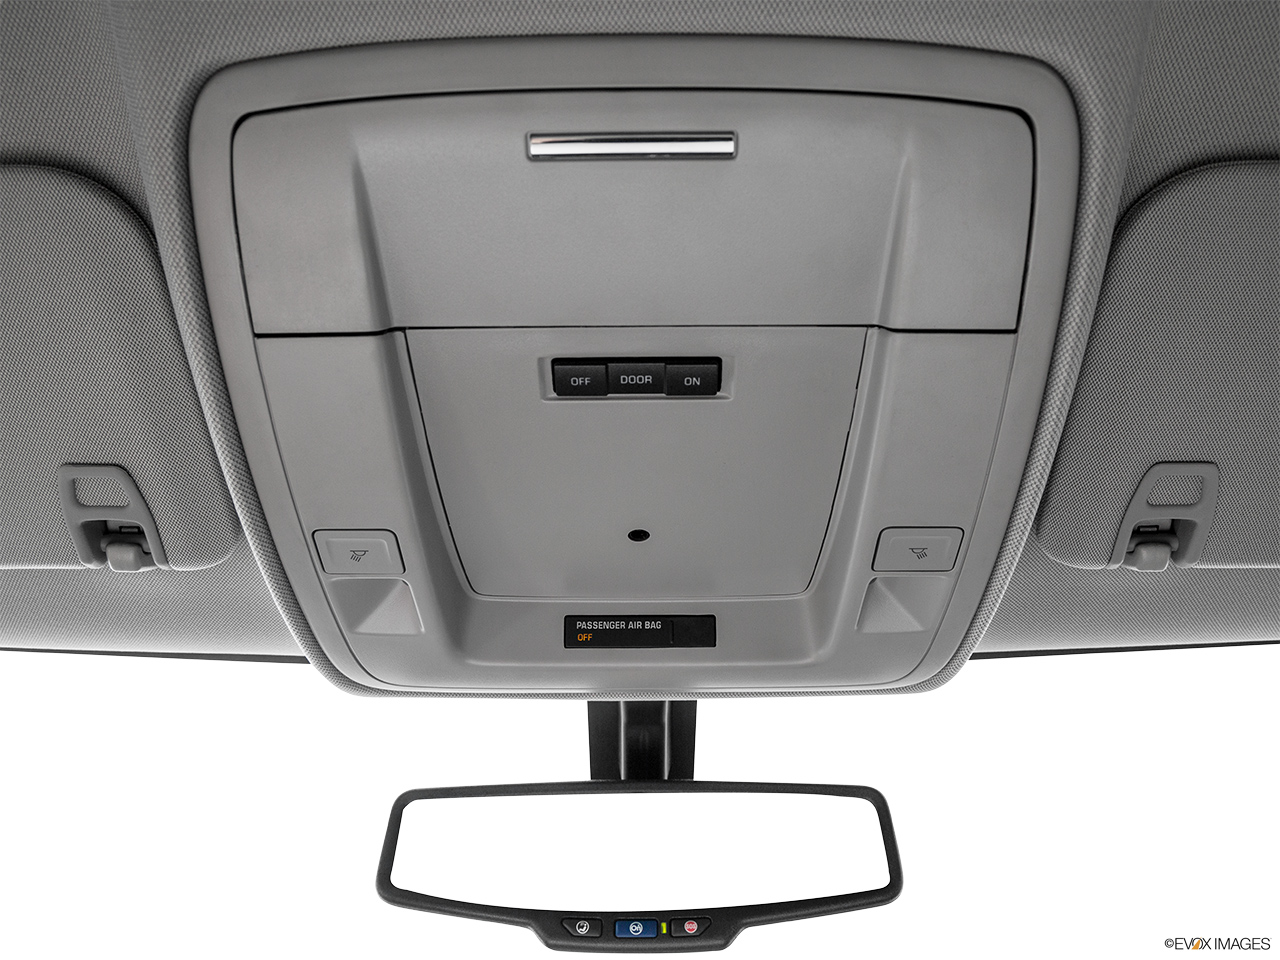 2016 GMC Sierra 2500HD Base Courtesy lamps/ceiling controls. 